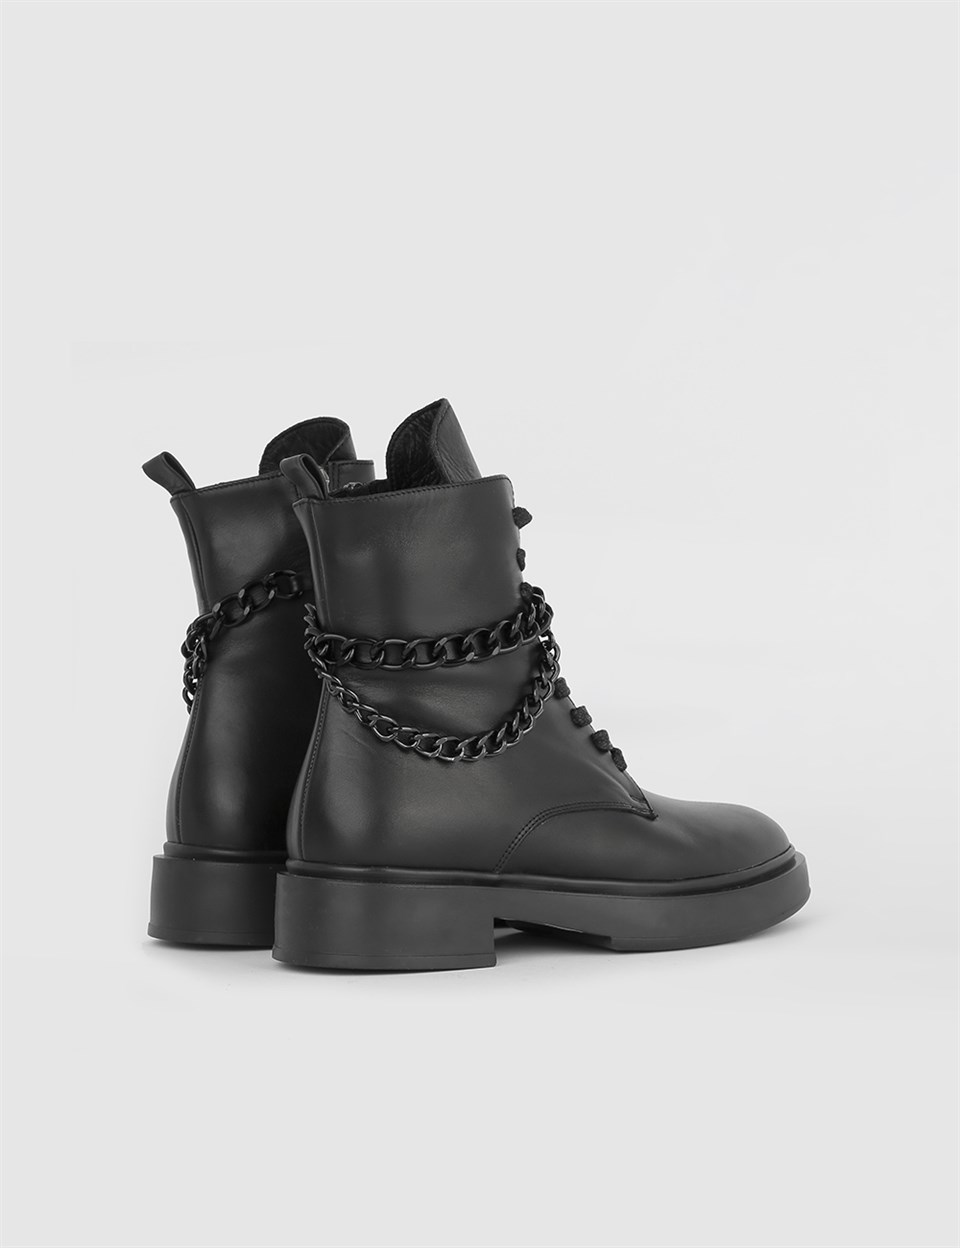 Jera Black Leather Women's Boot - İLVİ